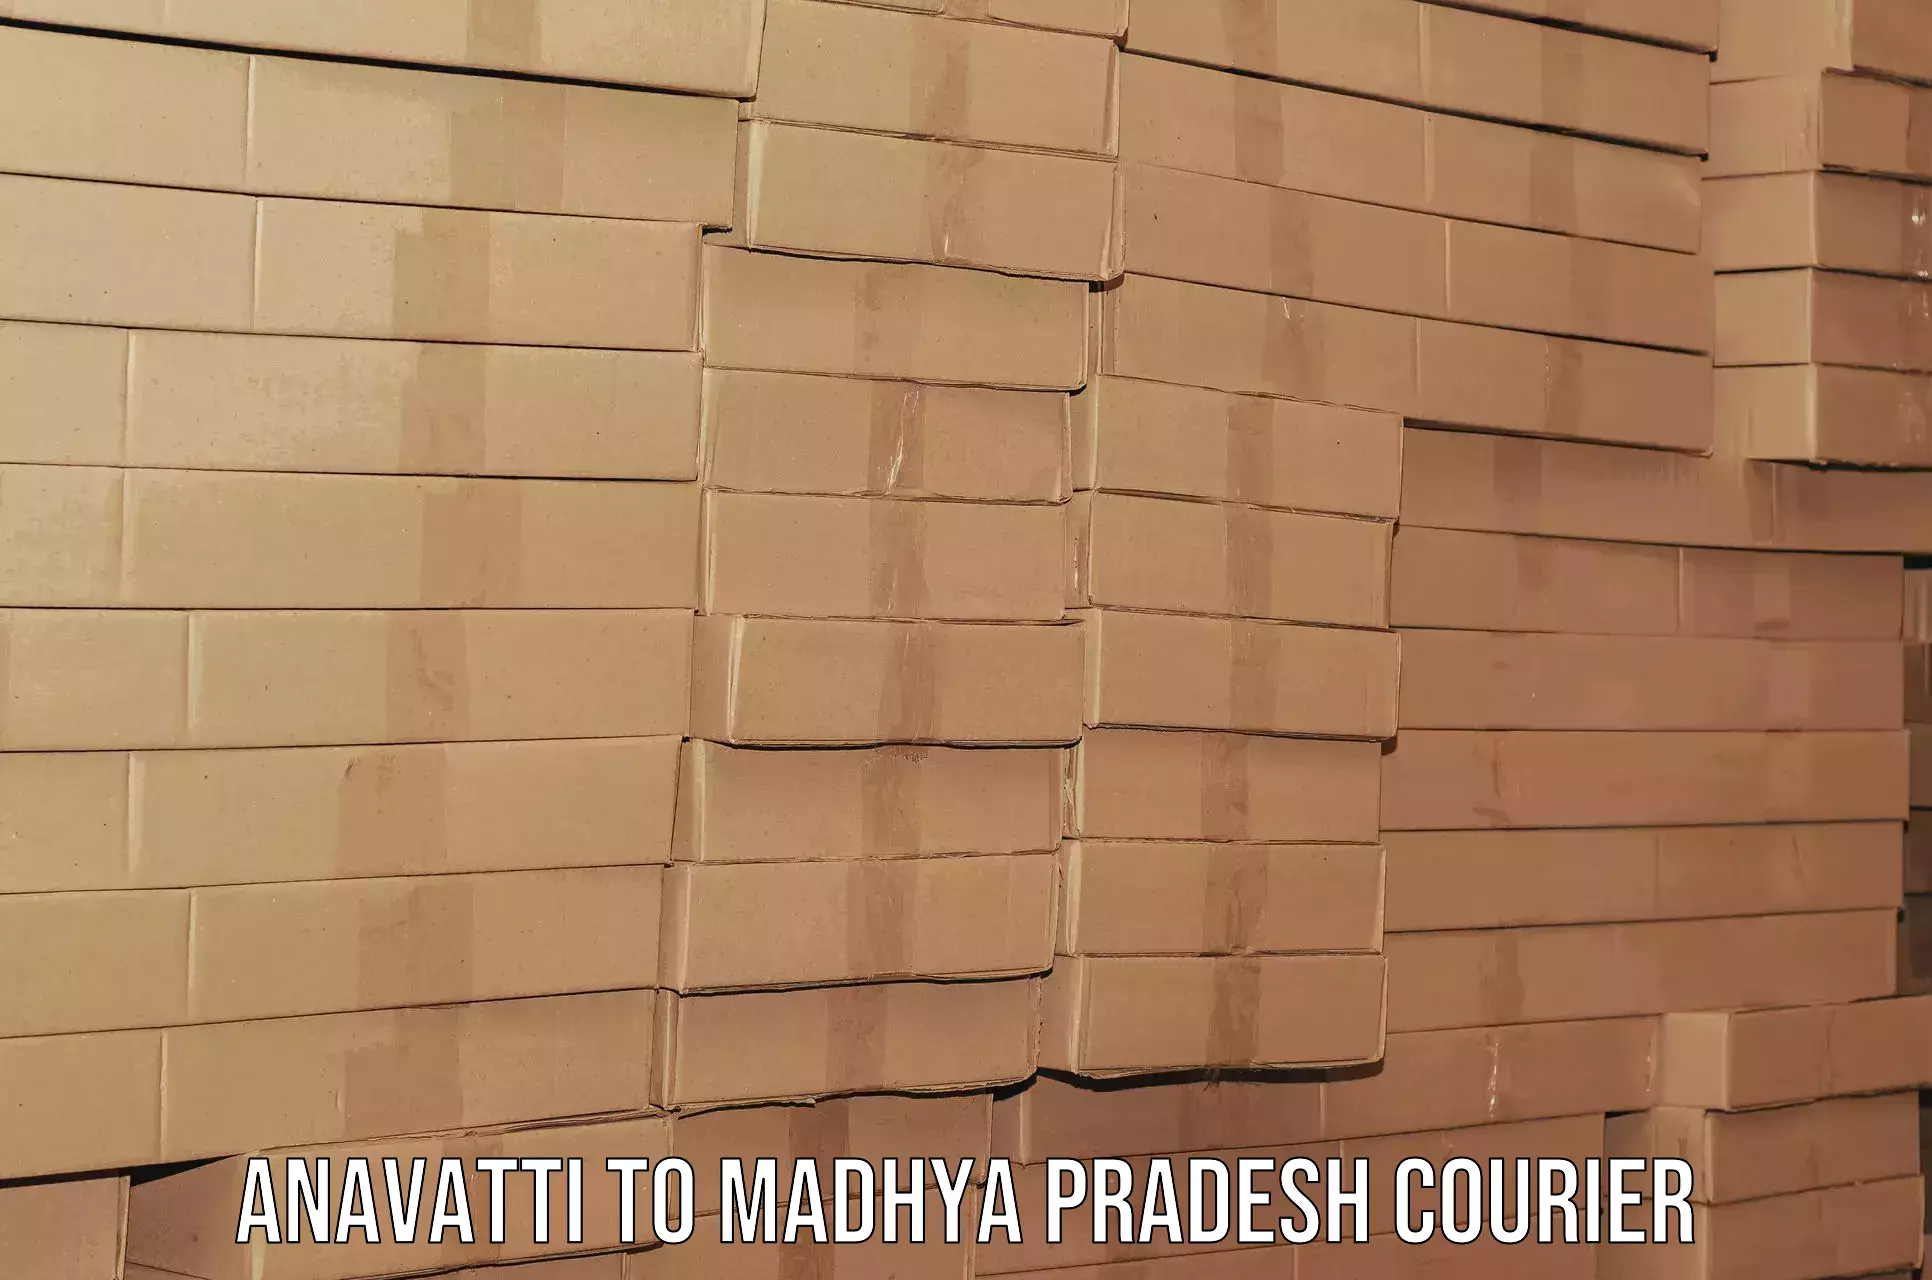 Trusted moving company Anavatti to Madhya Pradesh